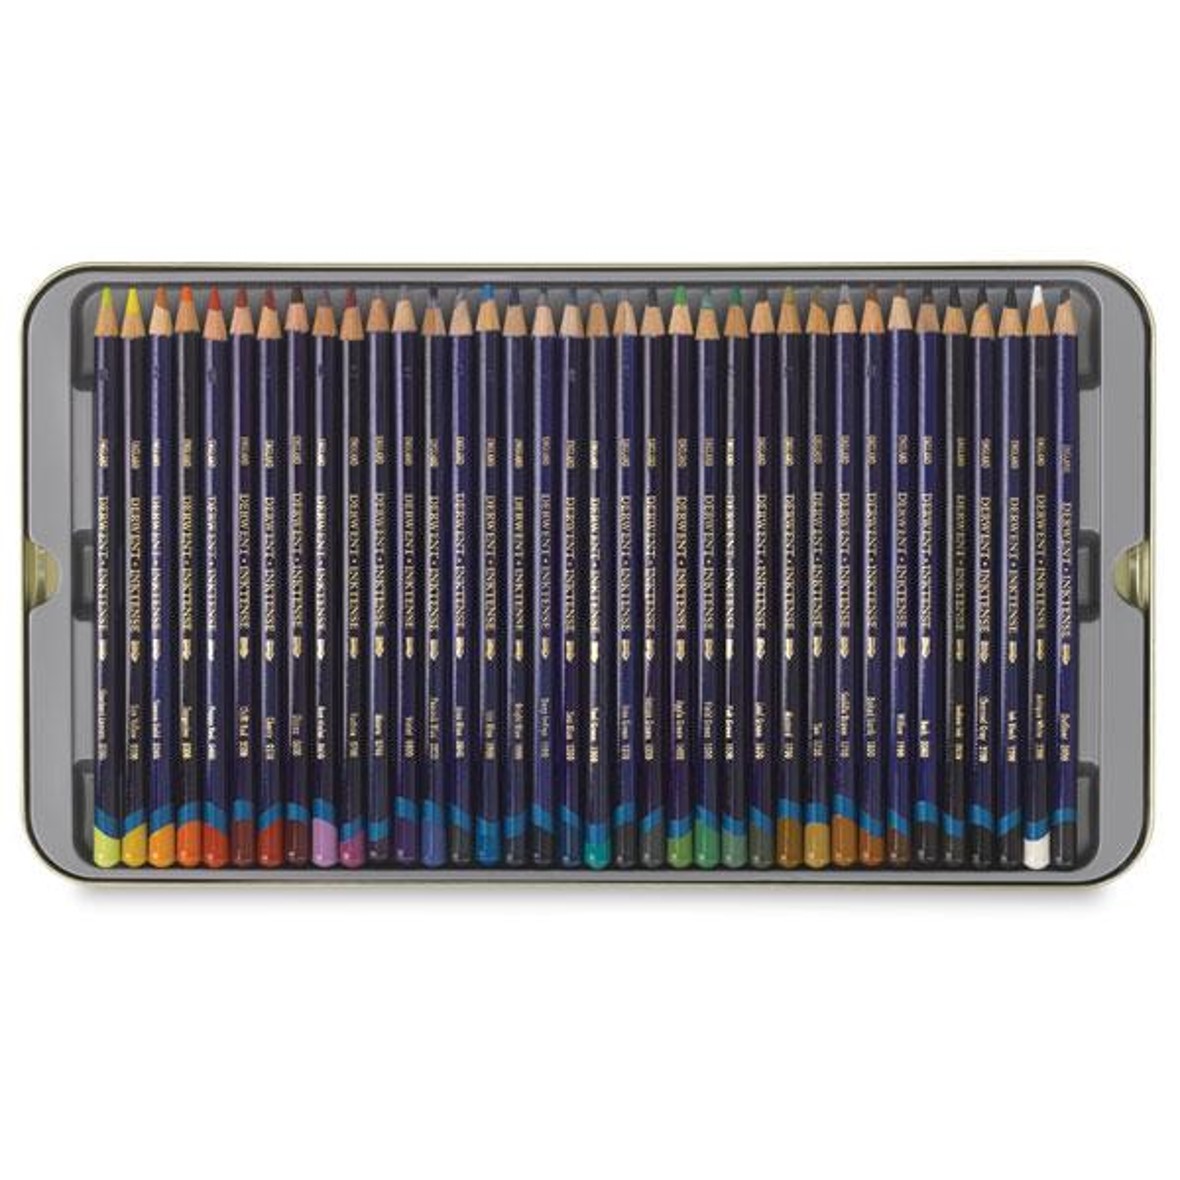 Inktense Pencils set of 36